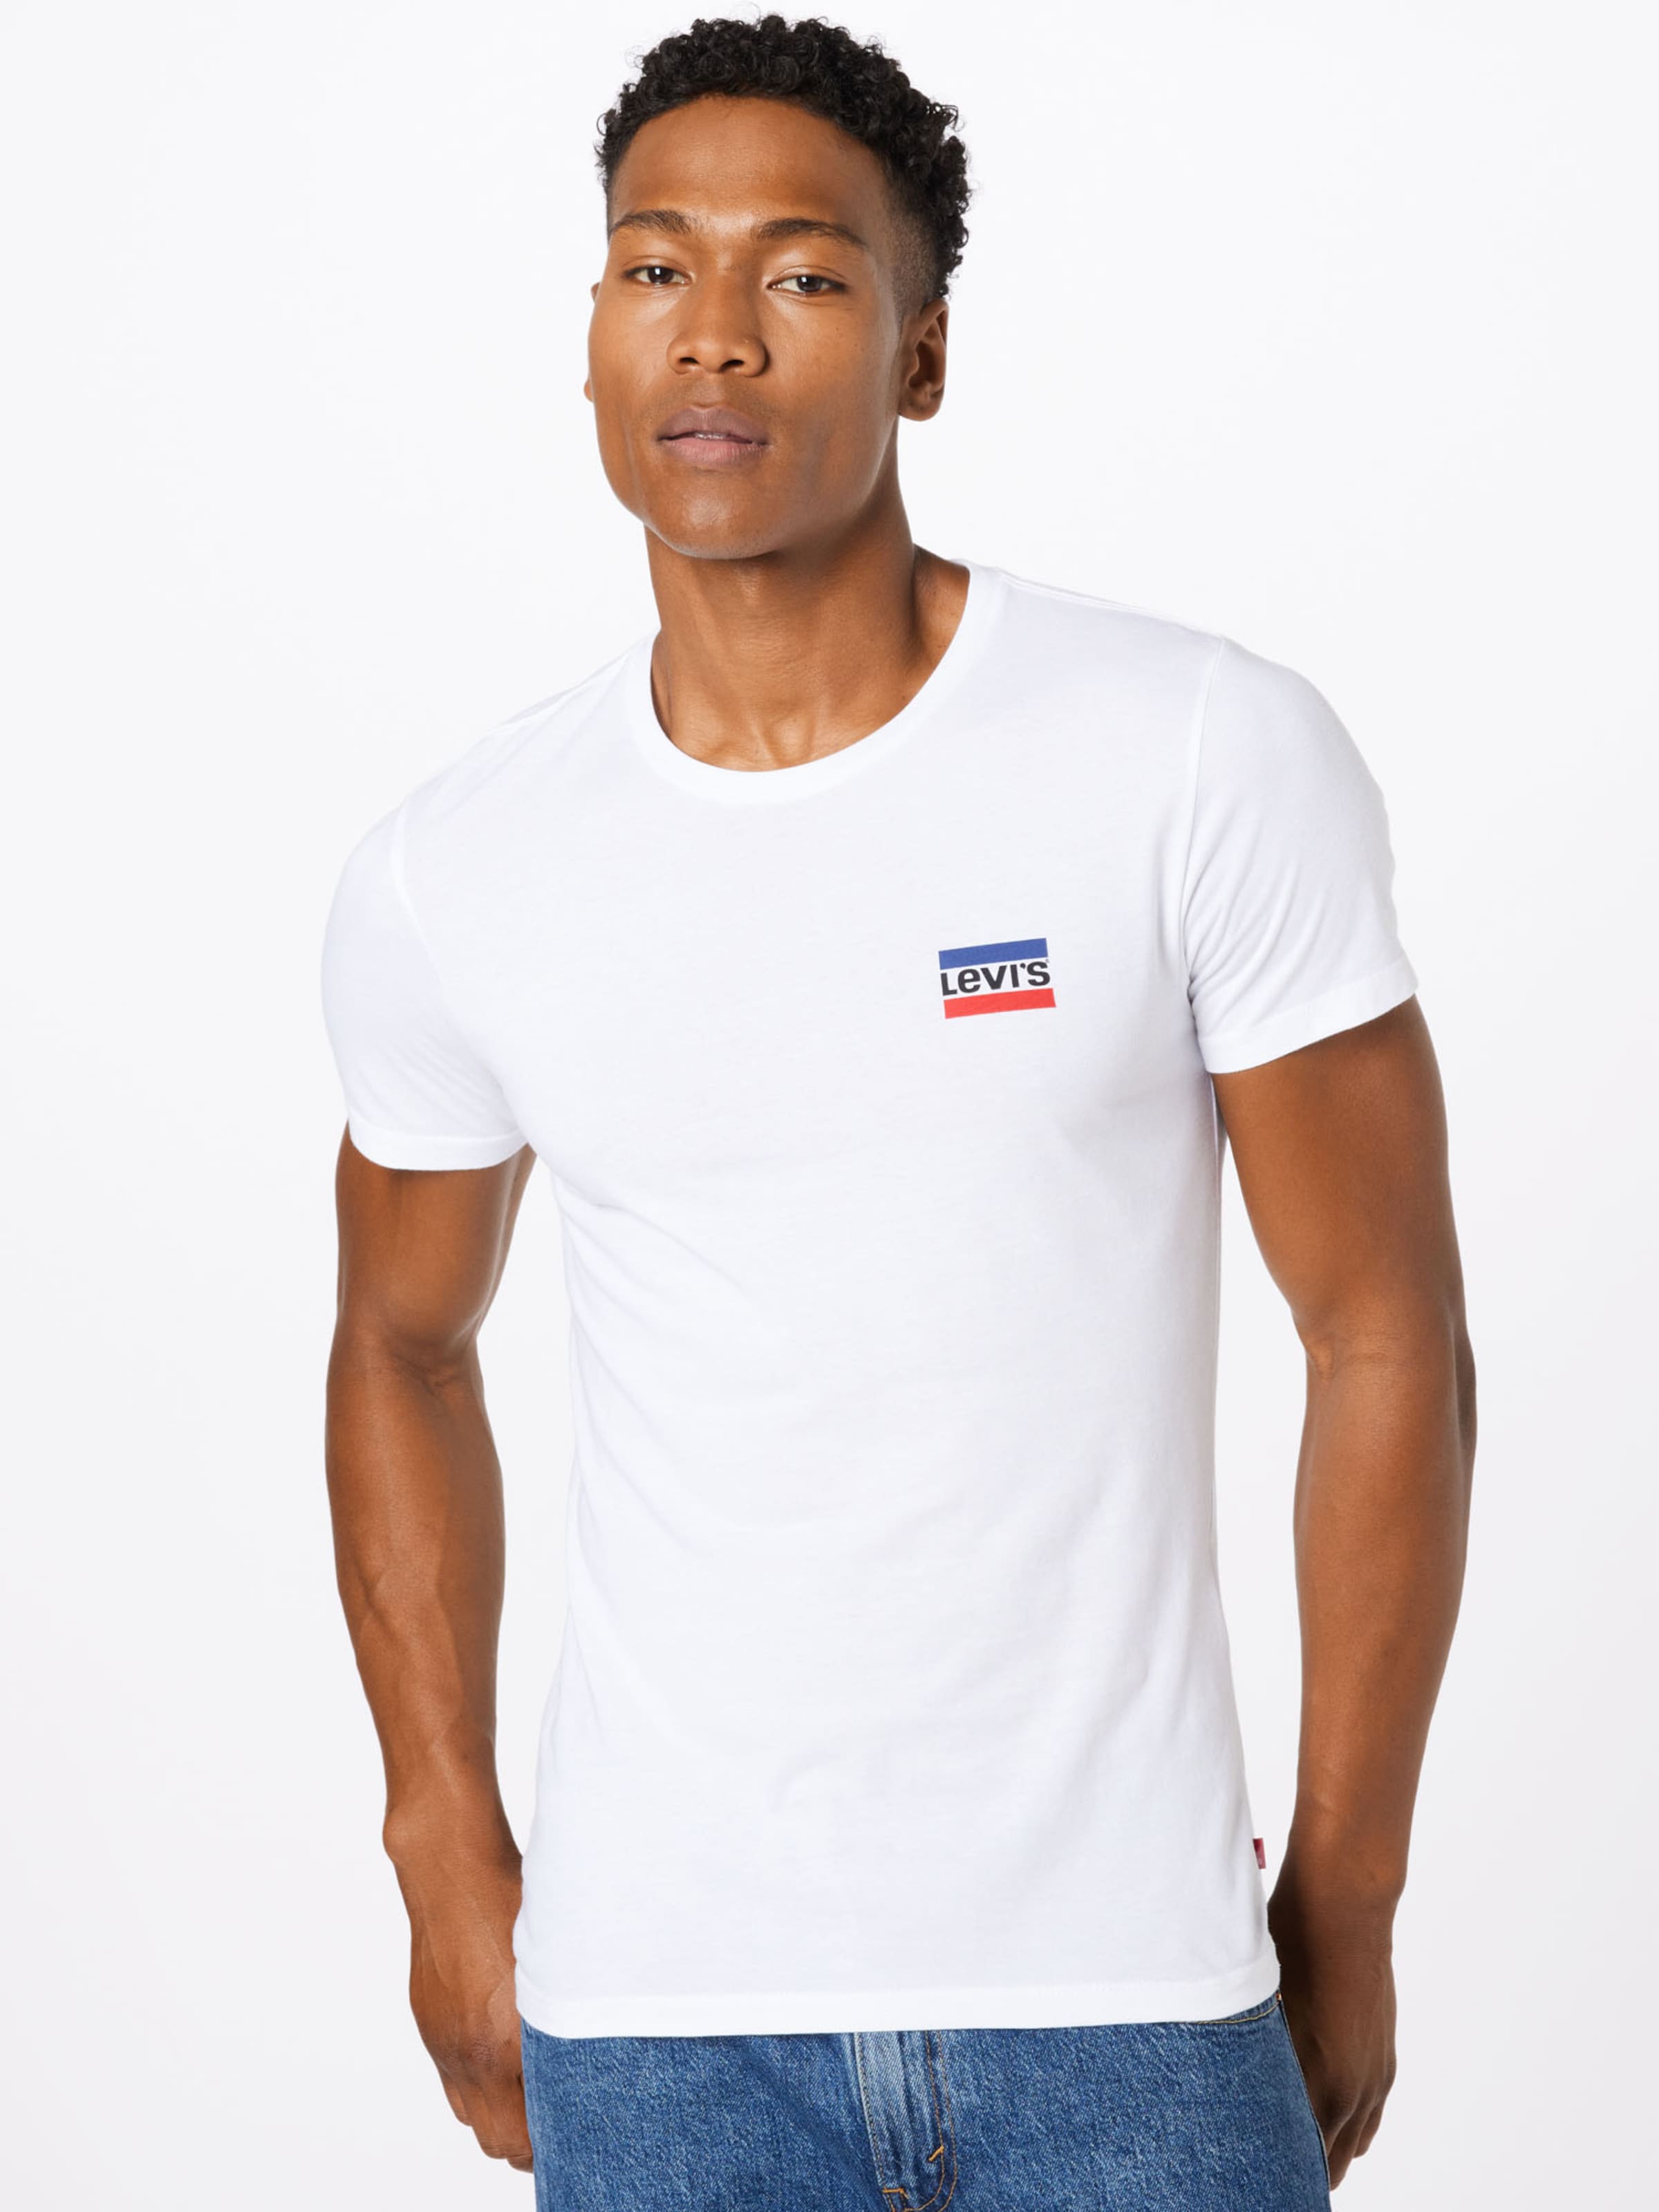 Männer Shirts LEVI'S T-Shirt in Grau, Weiß - HC32553